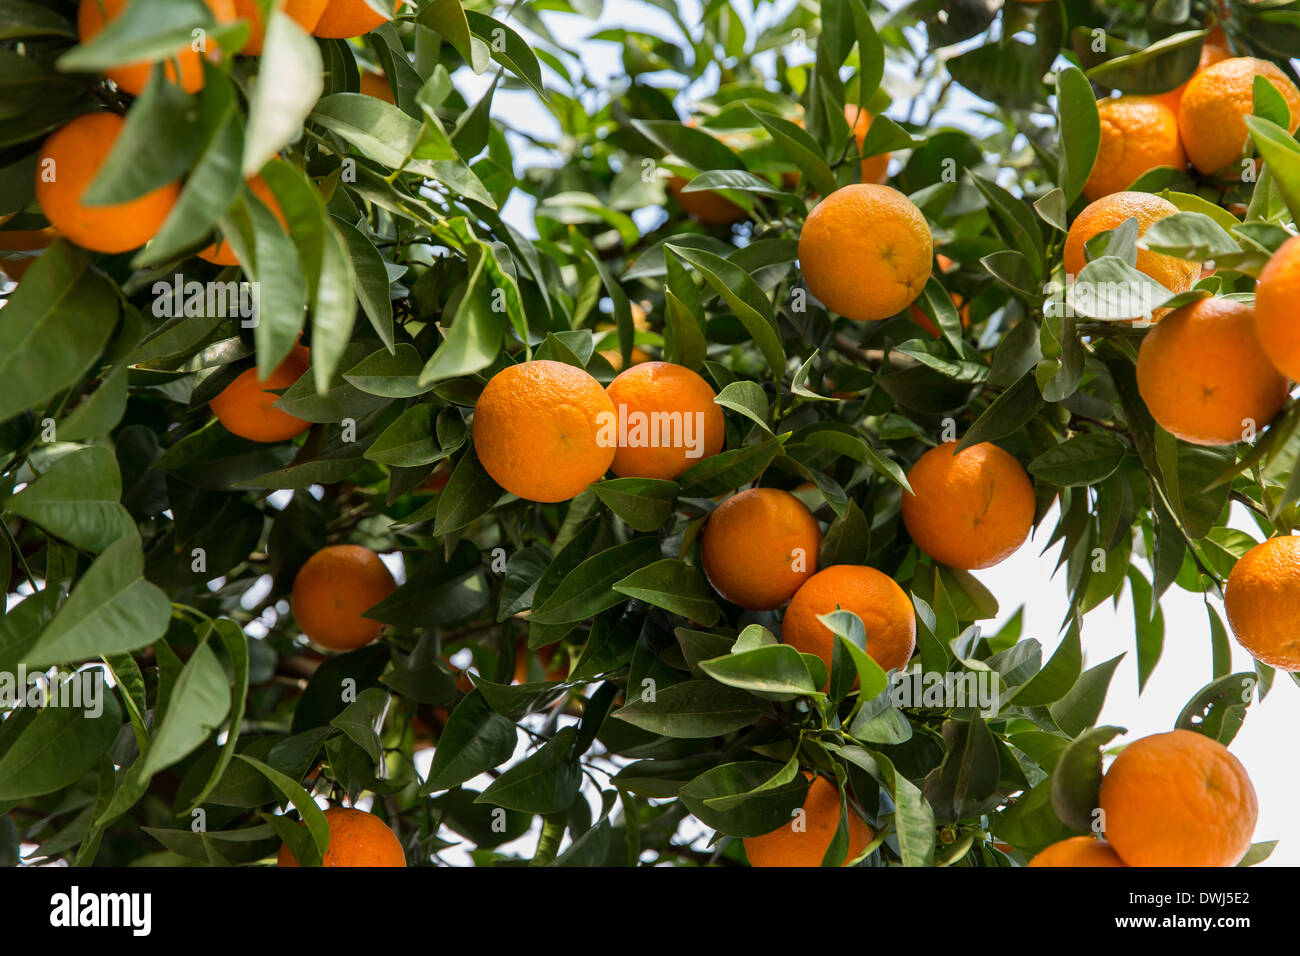 Orange citrus fruits on tree Stock Photo